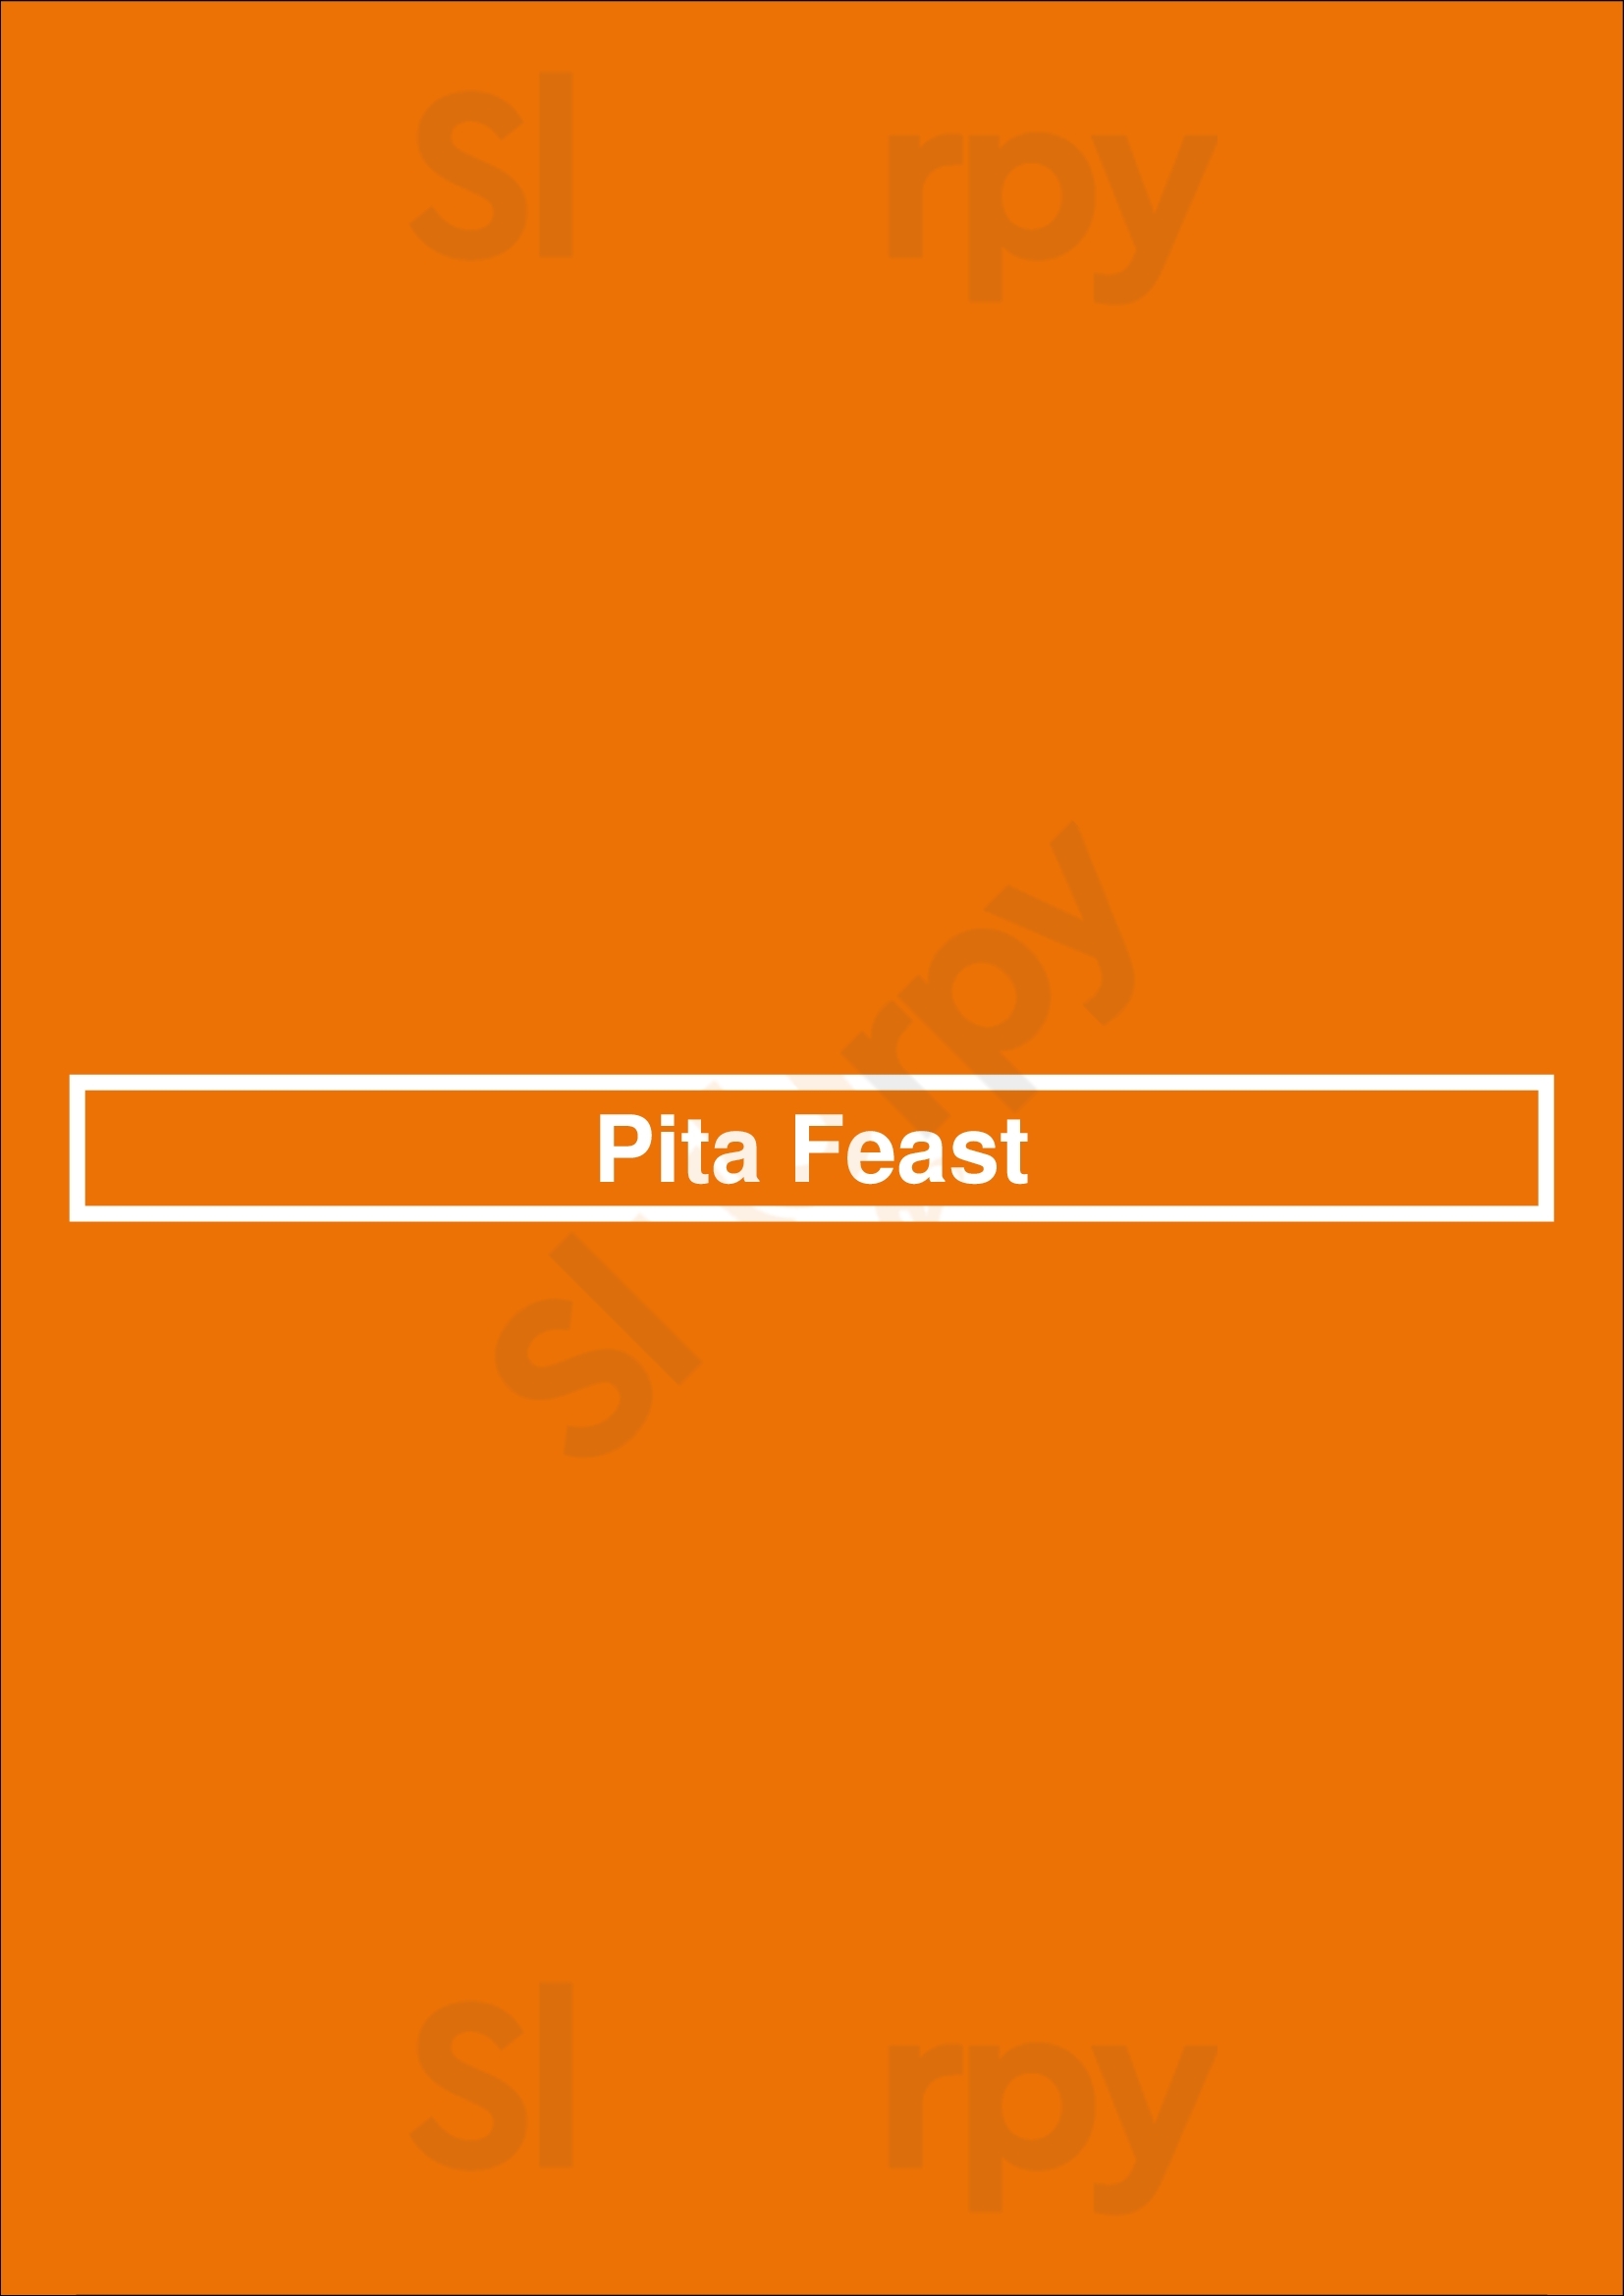 Pita Feast Huntington Beach Menu - 1